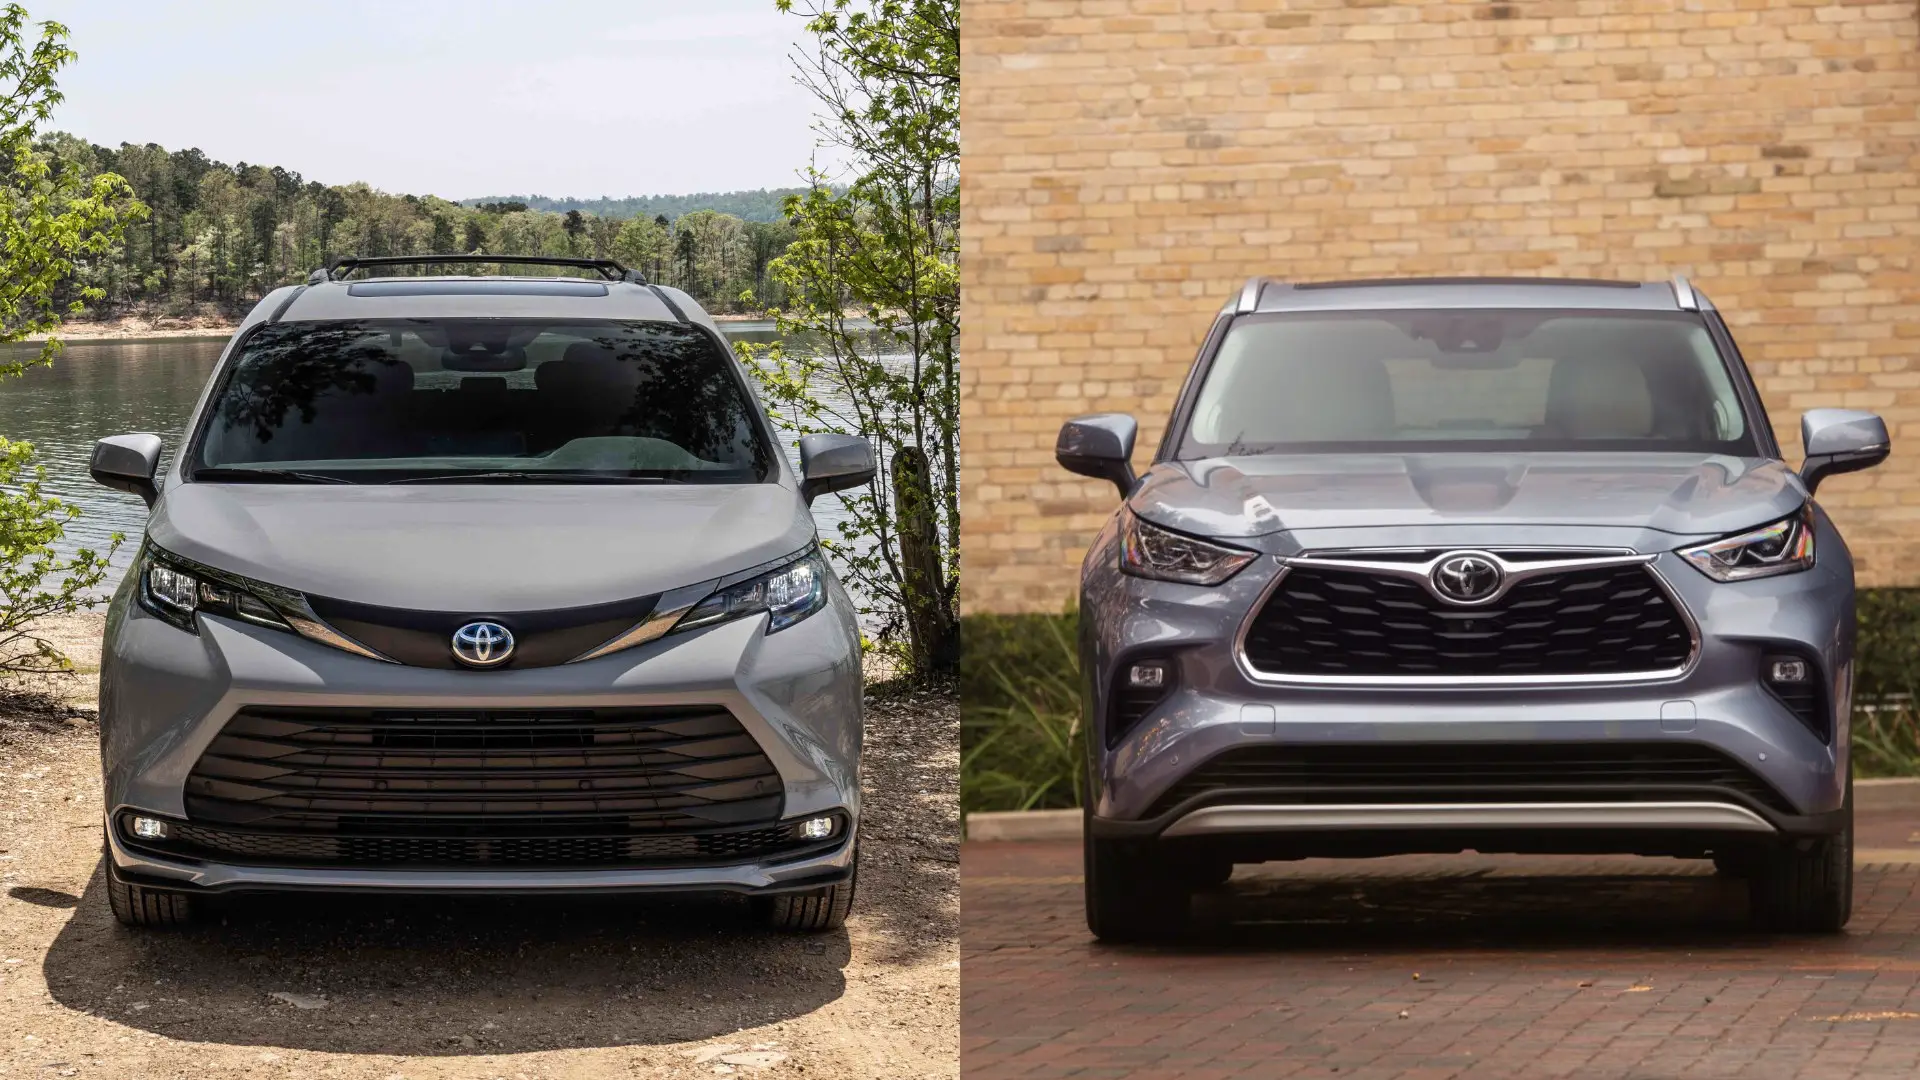 Toyota Sienna vs Highlander comparison